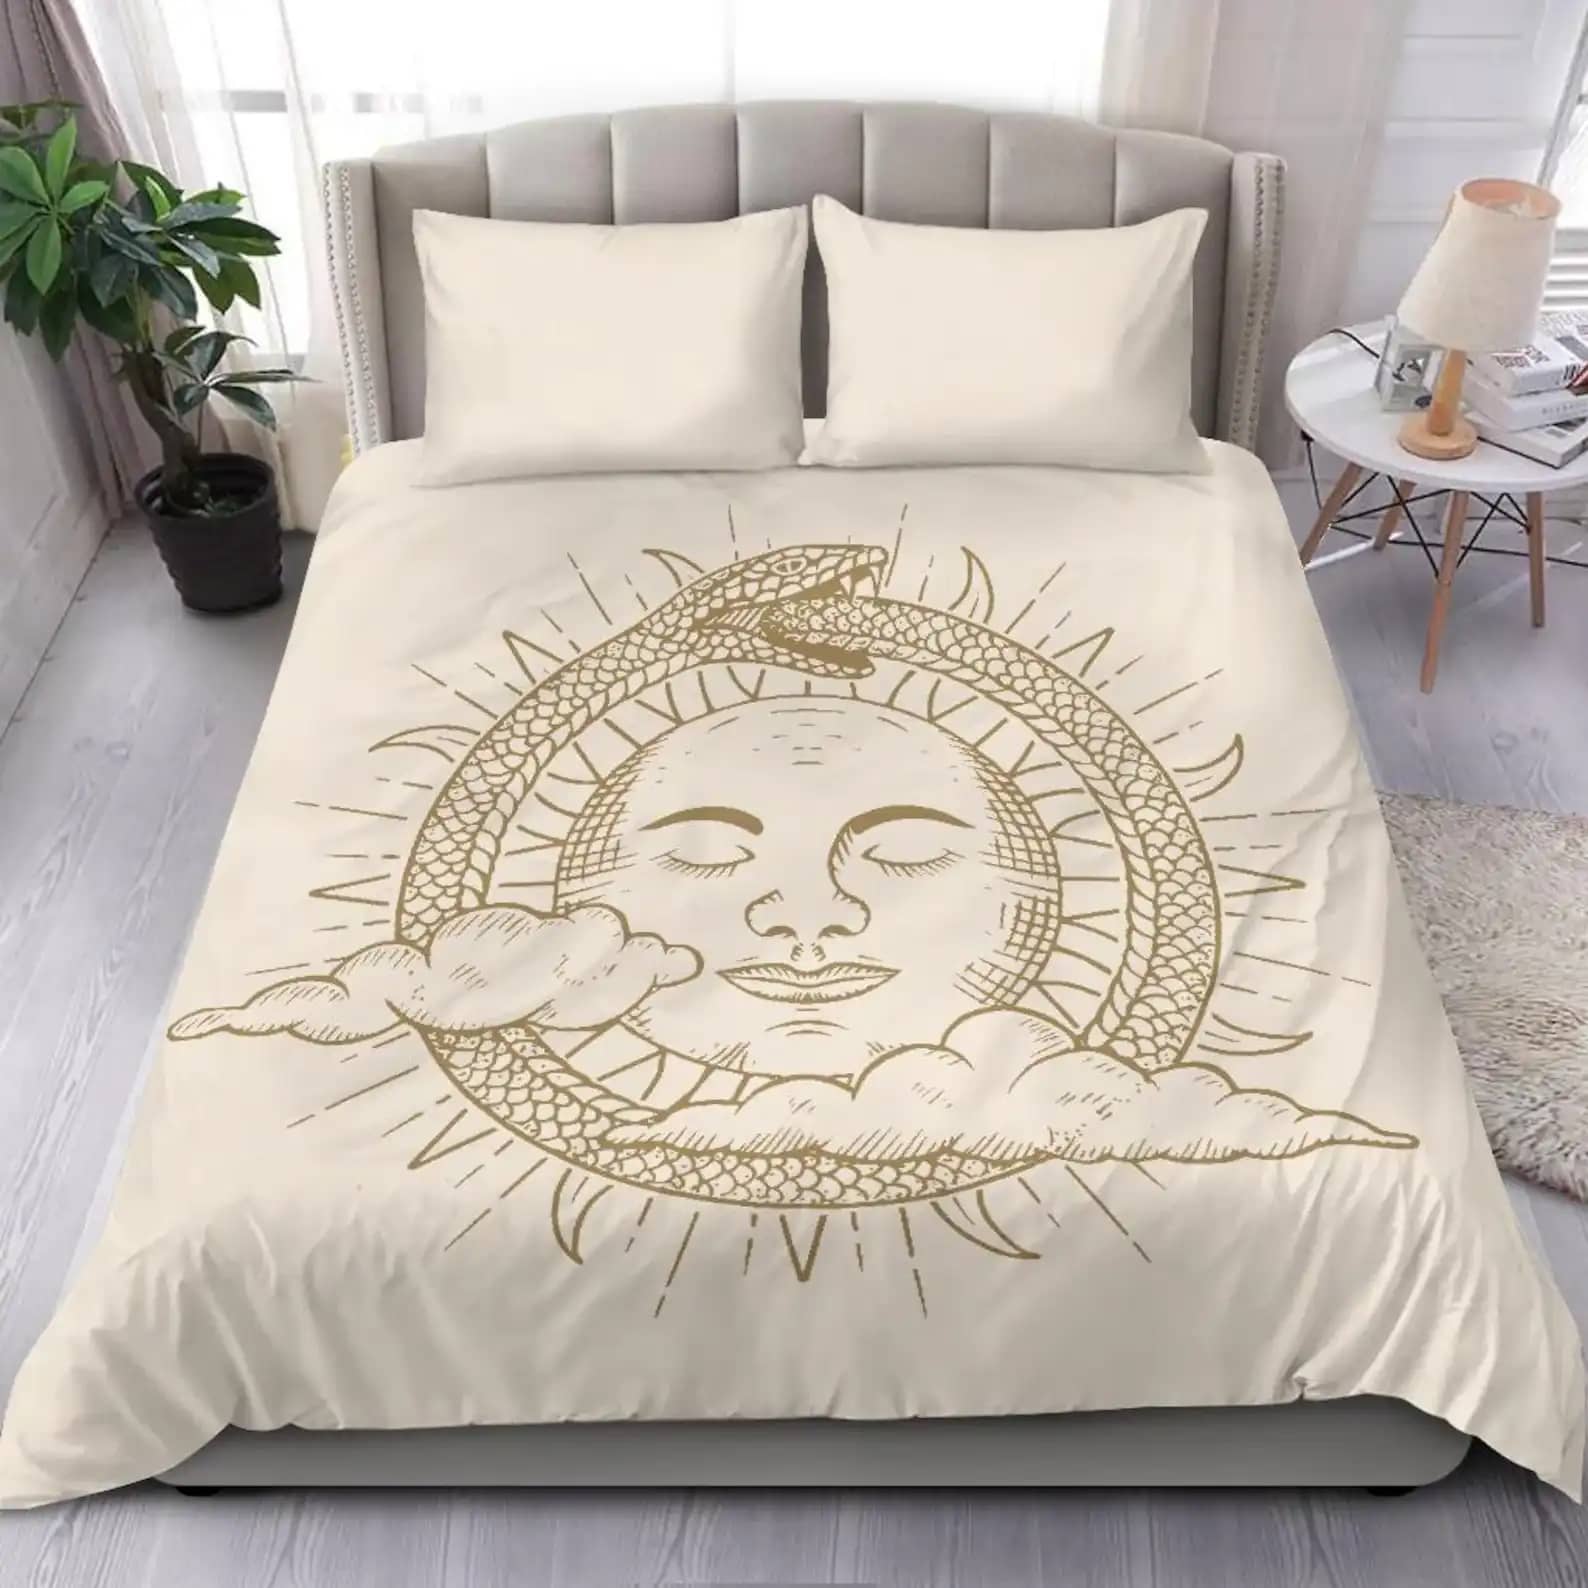 Astrology Bedding Peaceful Golden Sun Snake And Clouds Quilt Bedding Sets